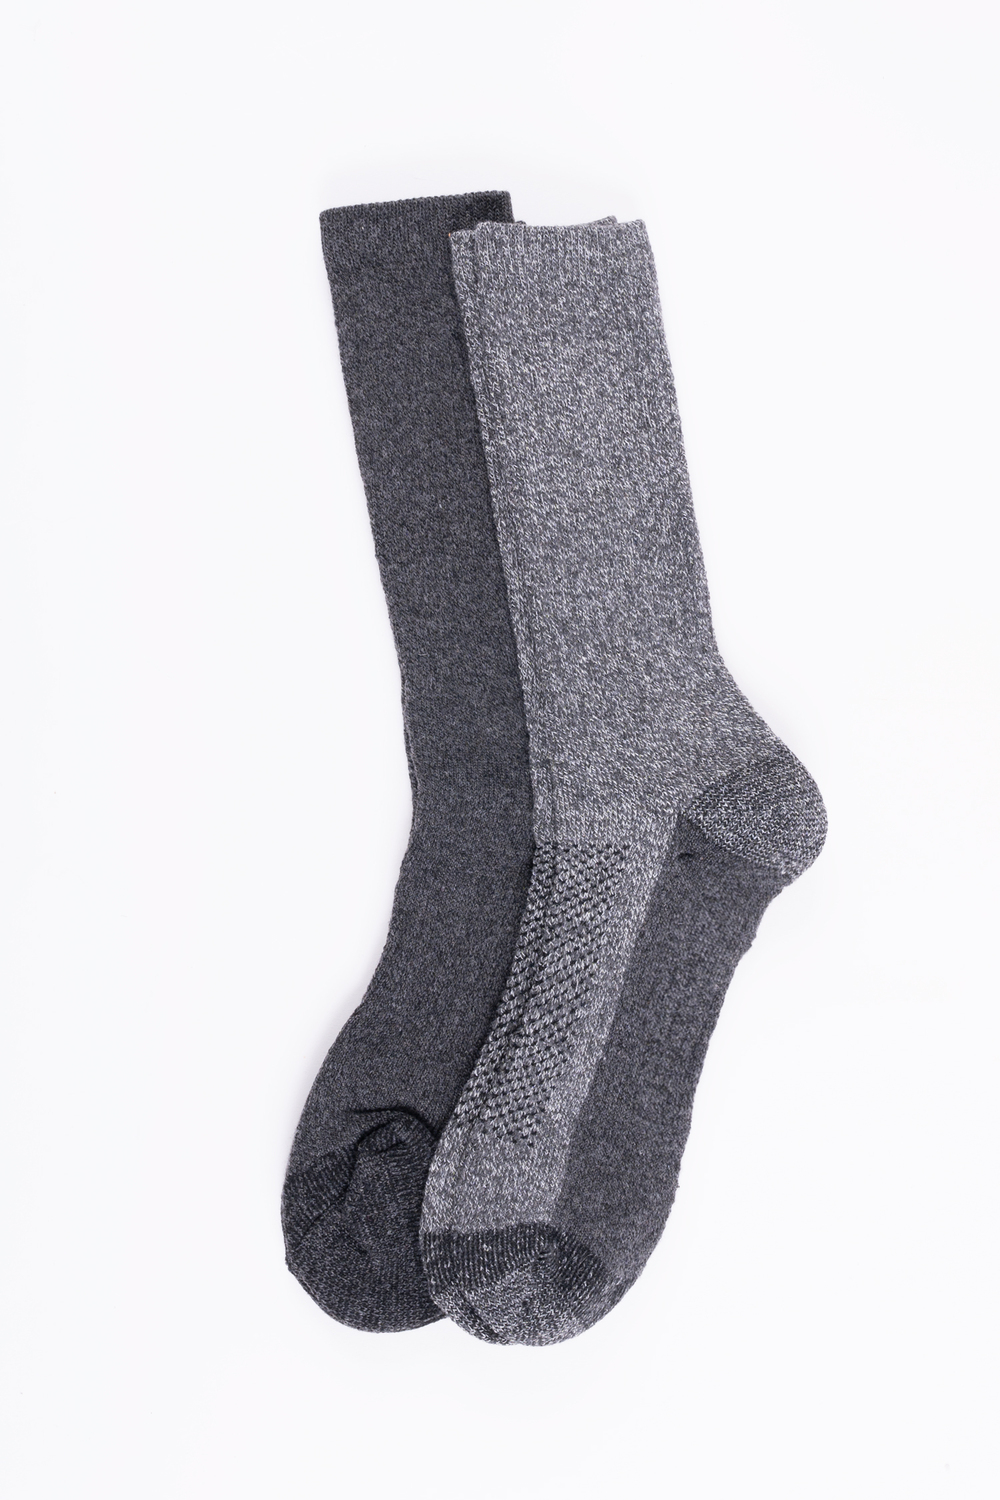 Polar Paws - Wool blend socks - 2 pairs. Colour: grey